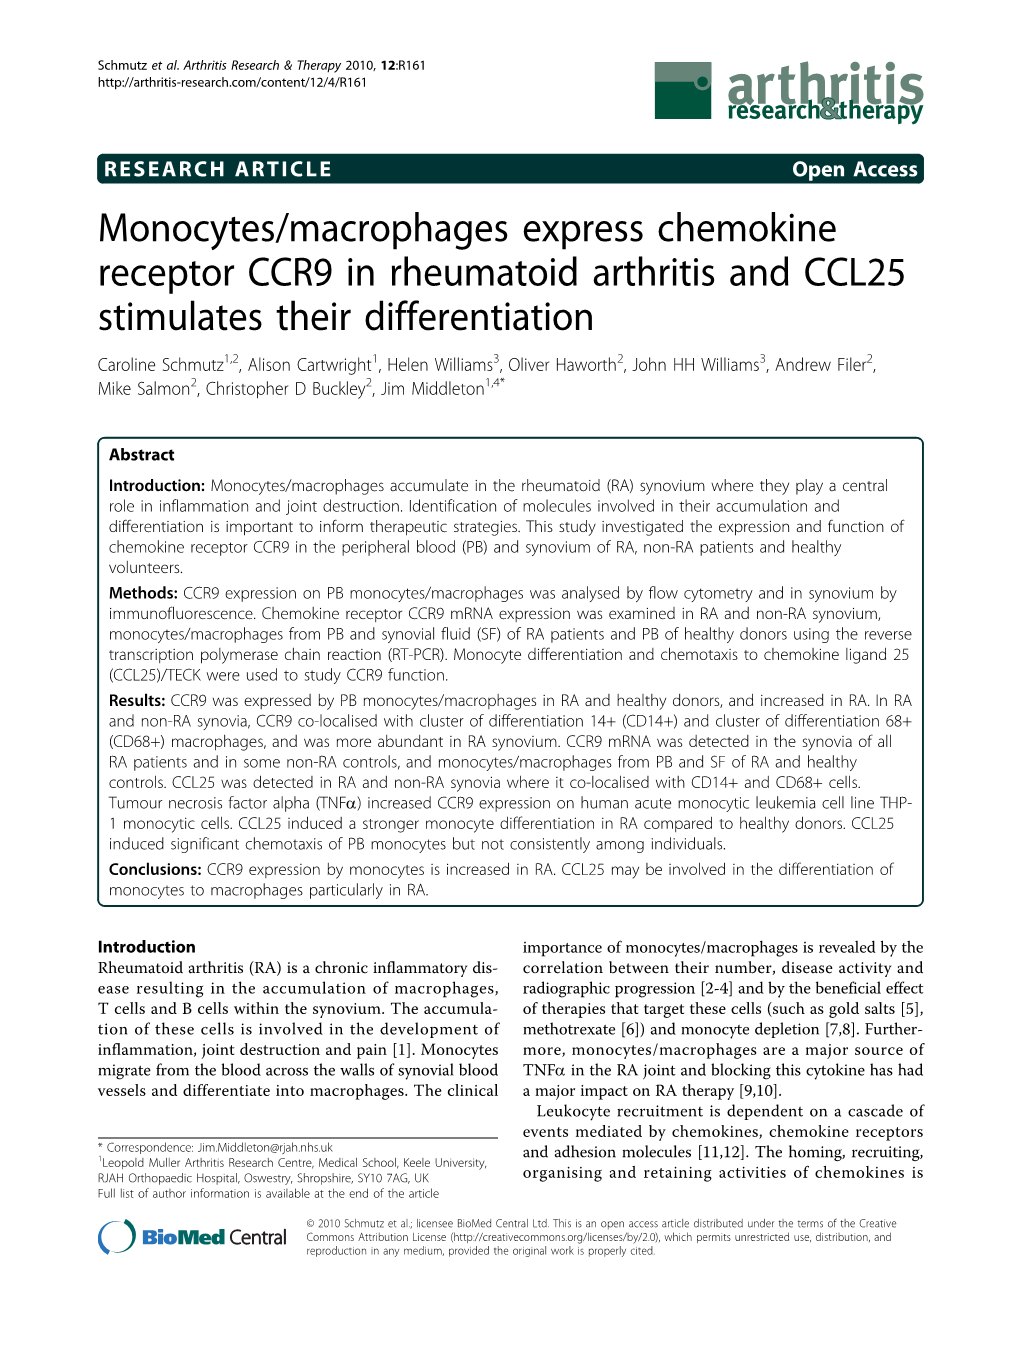 Monocytes/Macrophages Express Chemokine Receptor CCR9 In